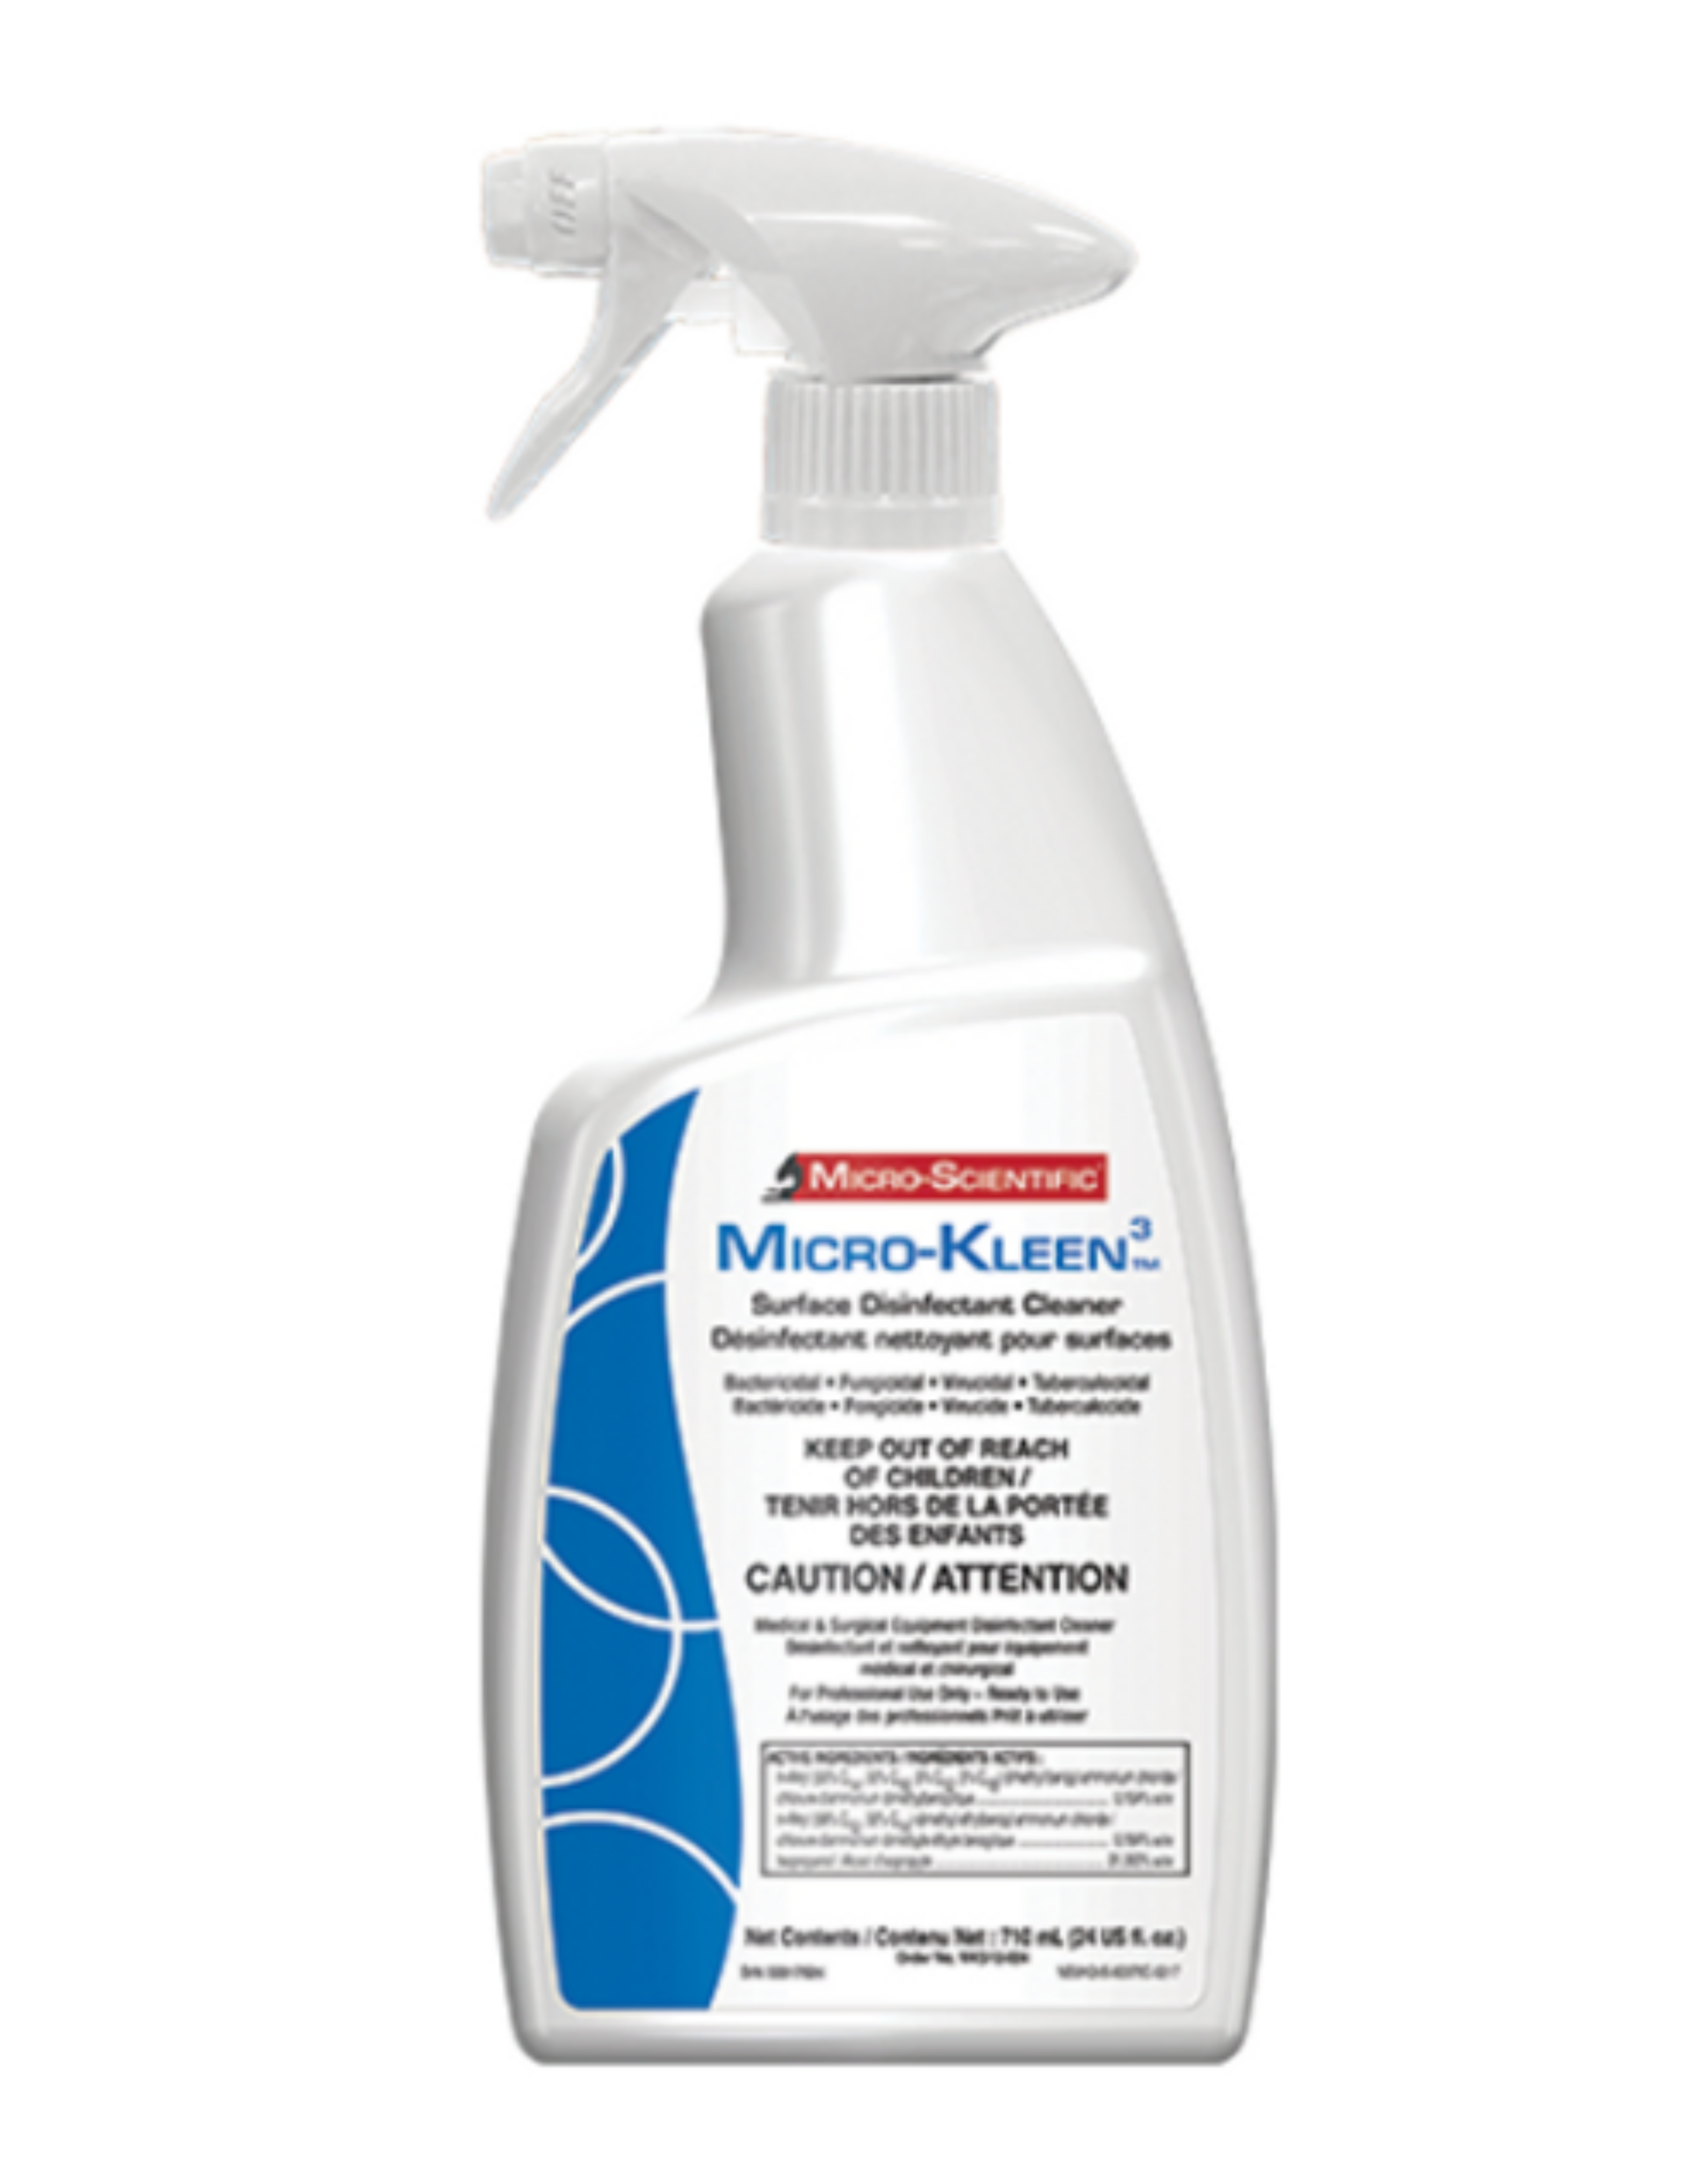 MicroKleen3 Spray